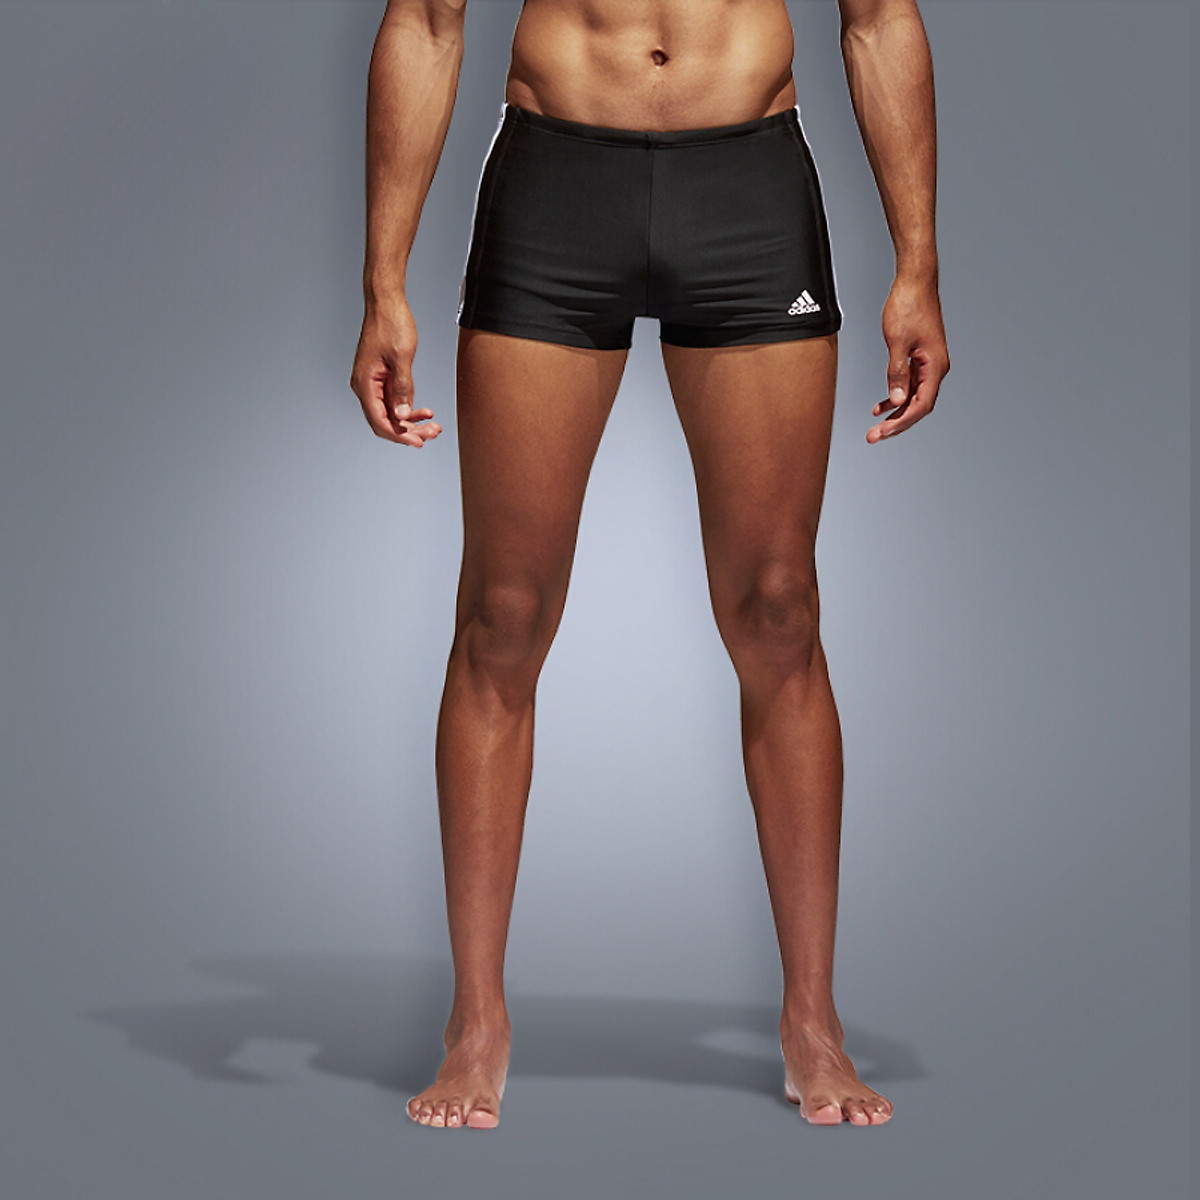 Adidas adidas swimming trunks male high elastic comfortable boxer swimsuit  quick-drying non-body men's swimming trunks anti-chlorine BQ0631 | Tiki